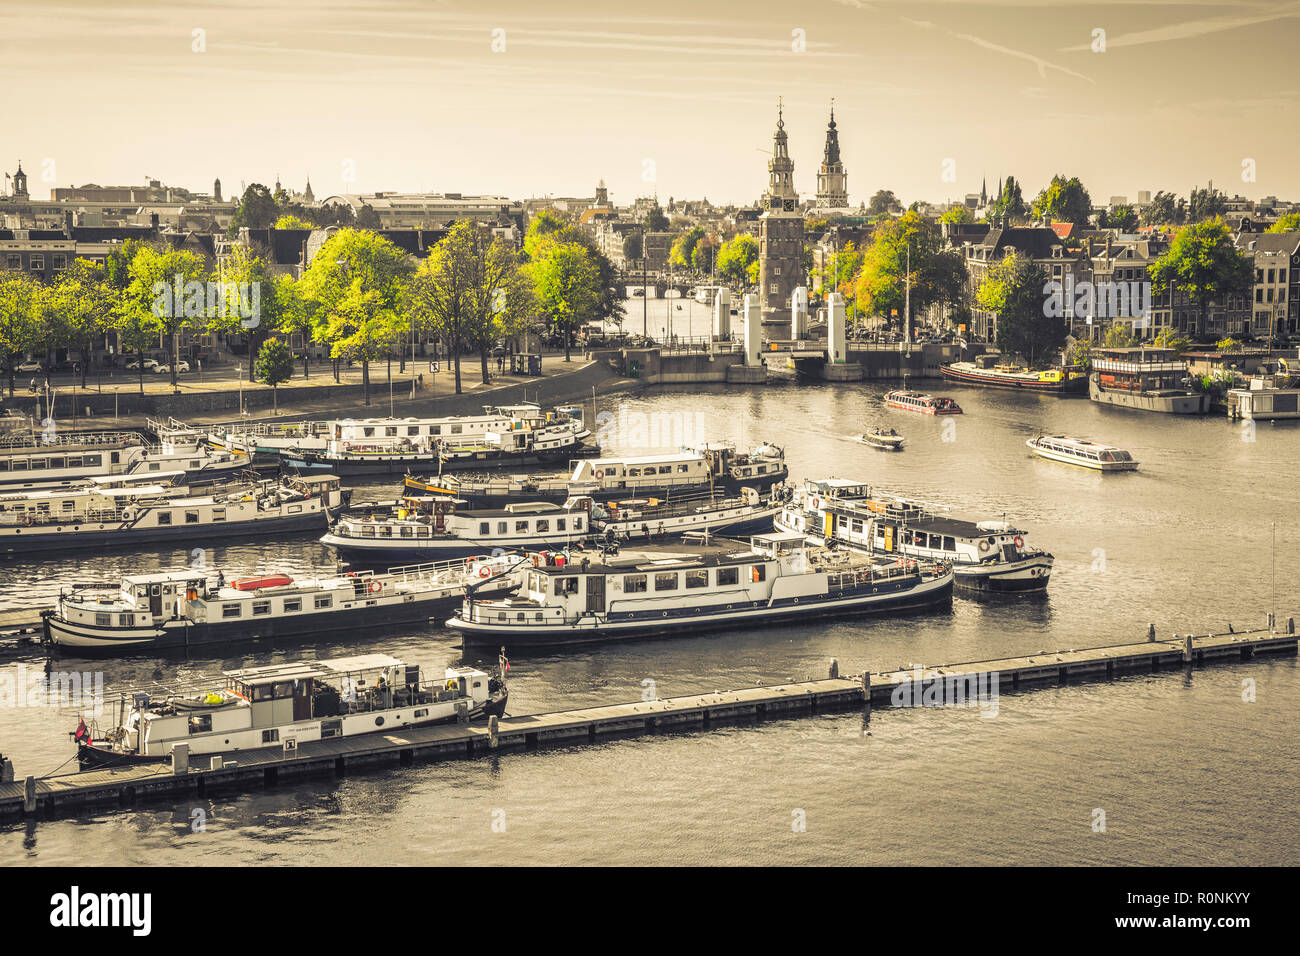 Vista Pavoramic tof Amsterdam, foto d'epoca Foto Stock